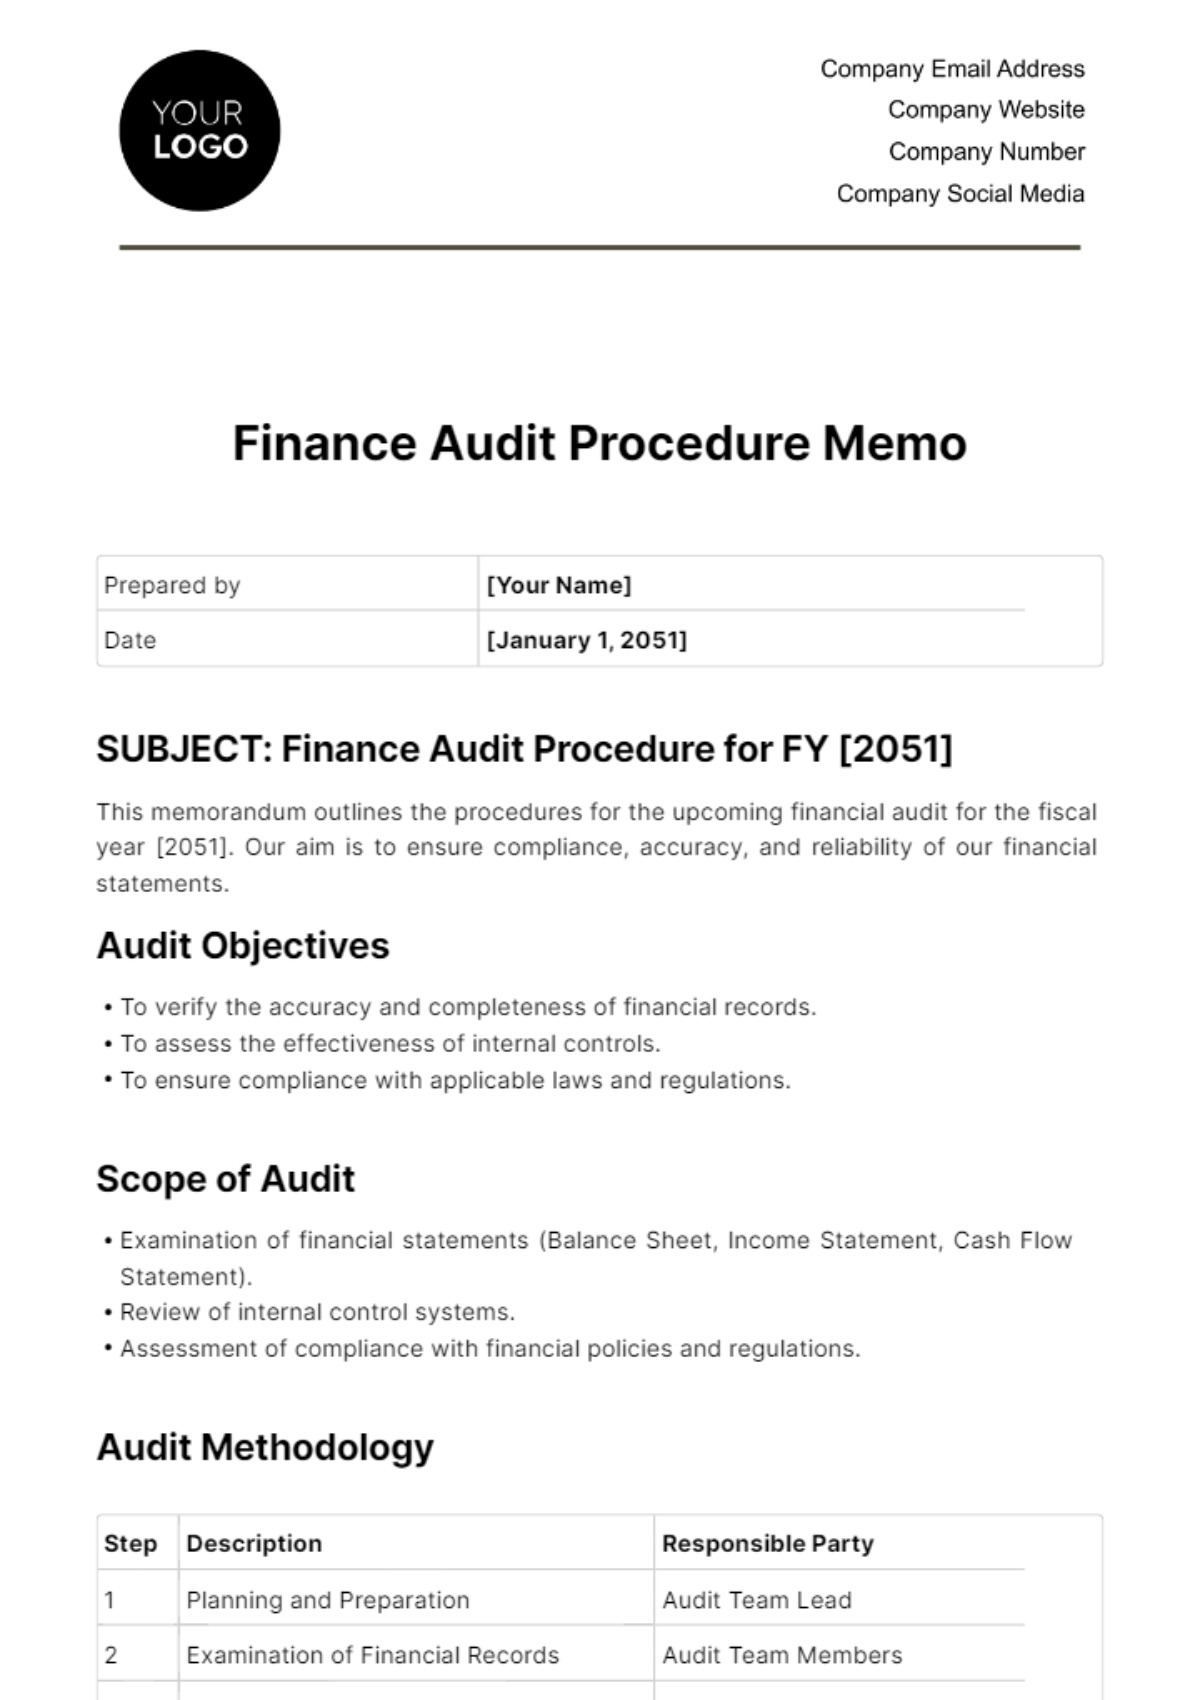 Free Finance Audit Procedure Memo Template